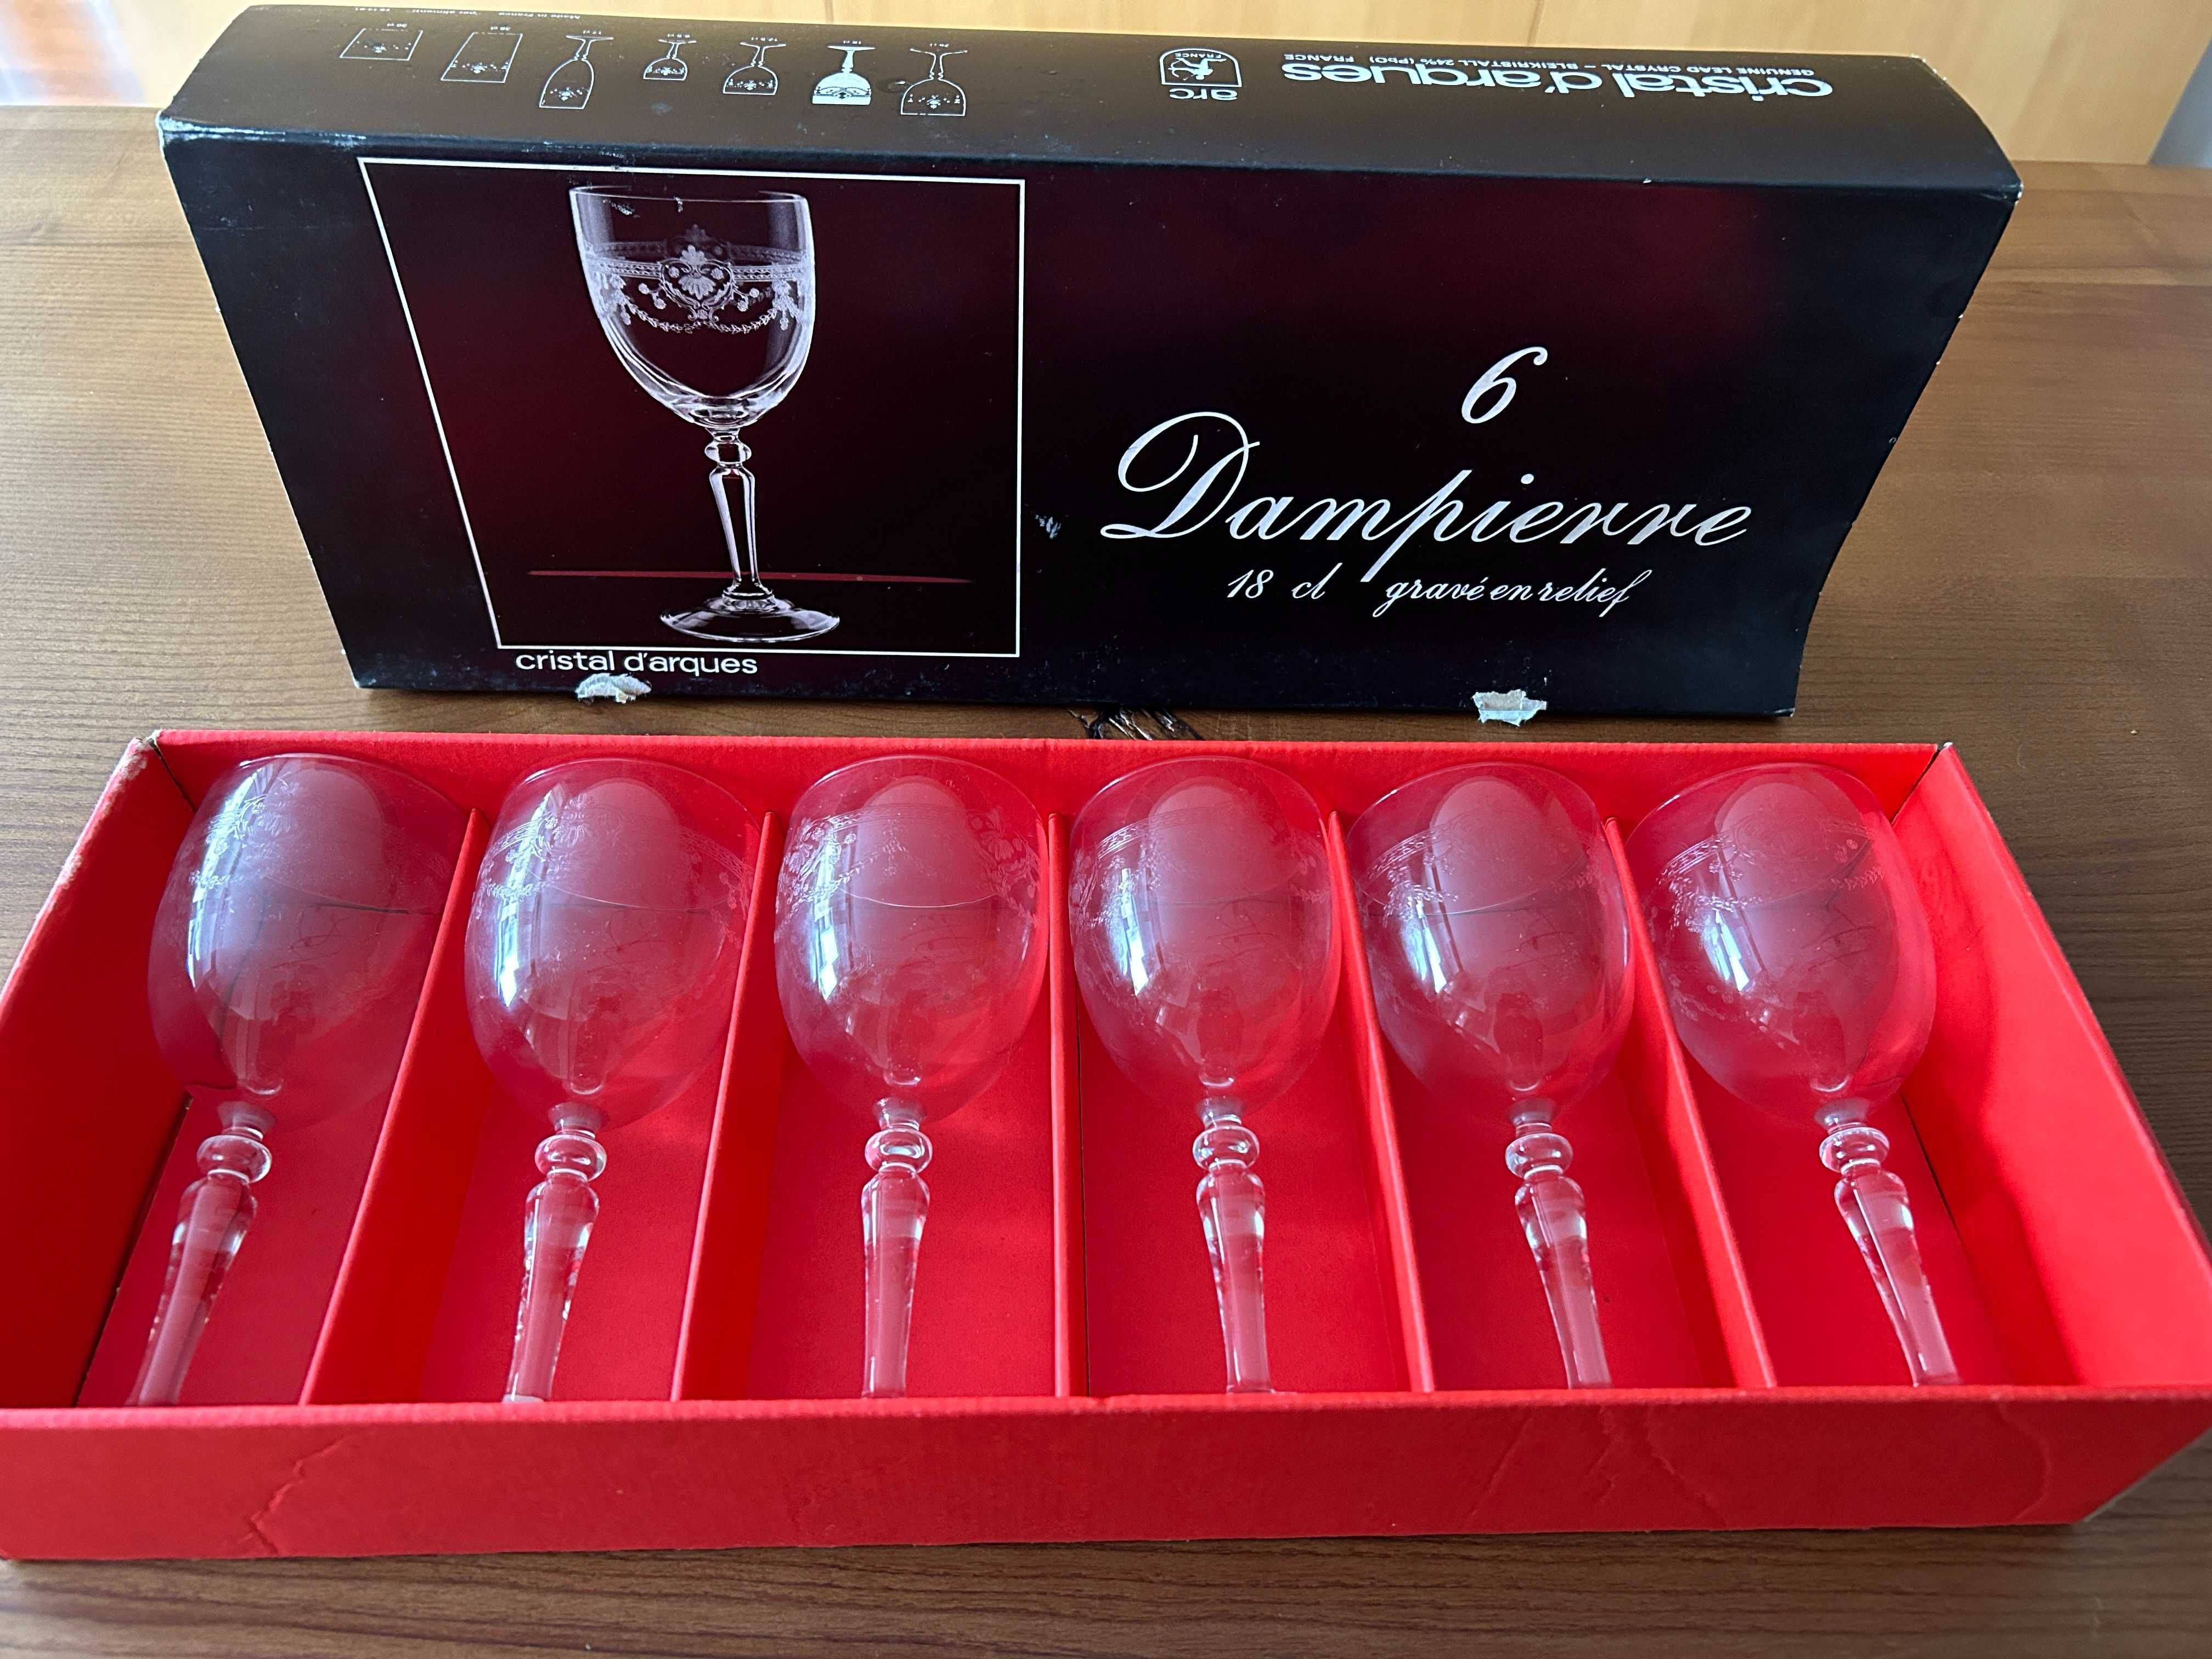 Lote de 78 copos de Cristal d'Arques, marca Dampierre